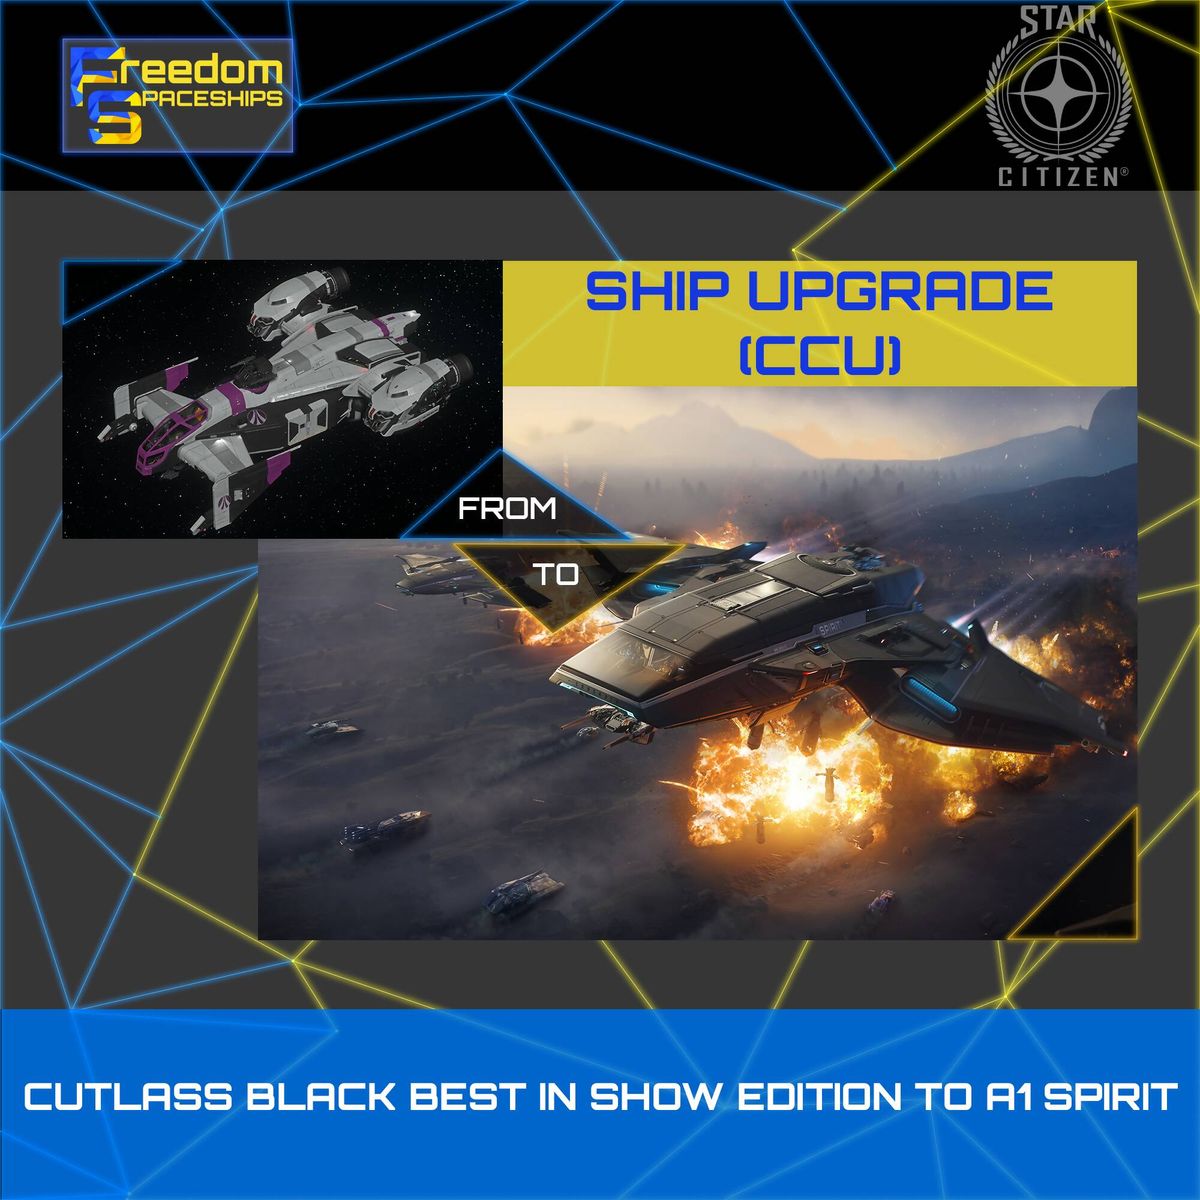 Upgrade - Cutlass Black Best In Show Edition to A1 Spirit